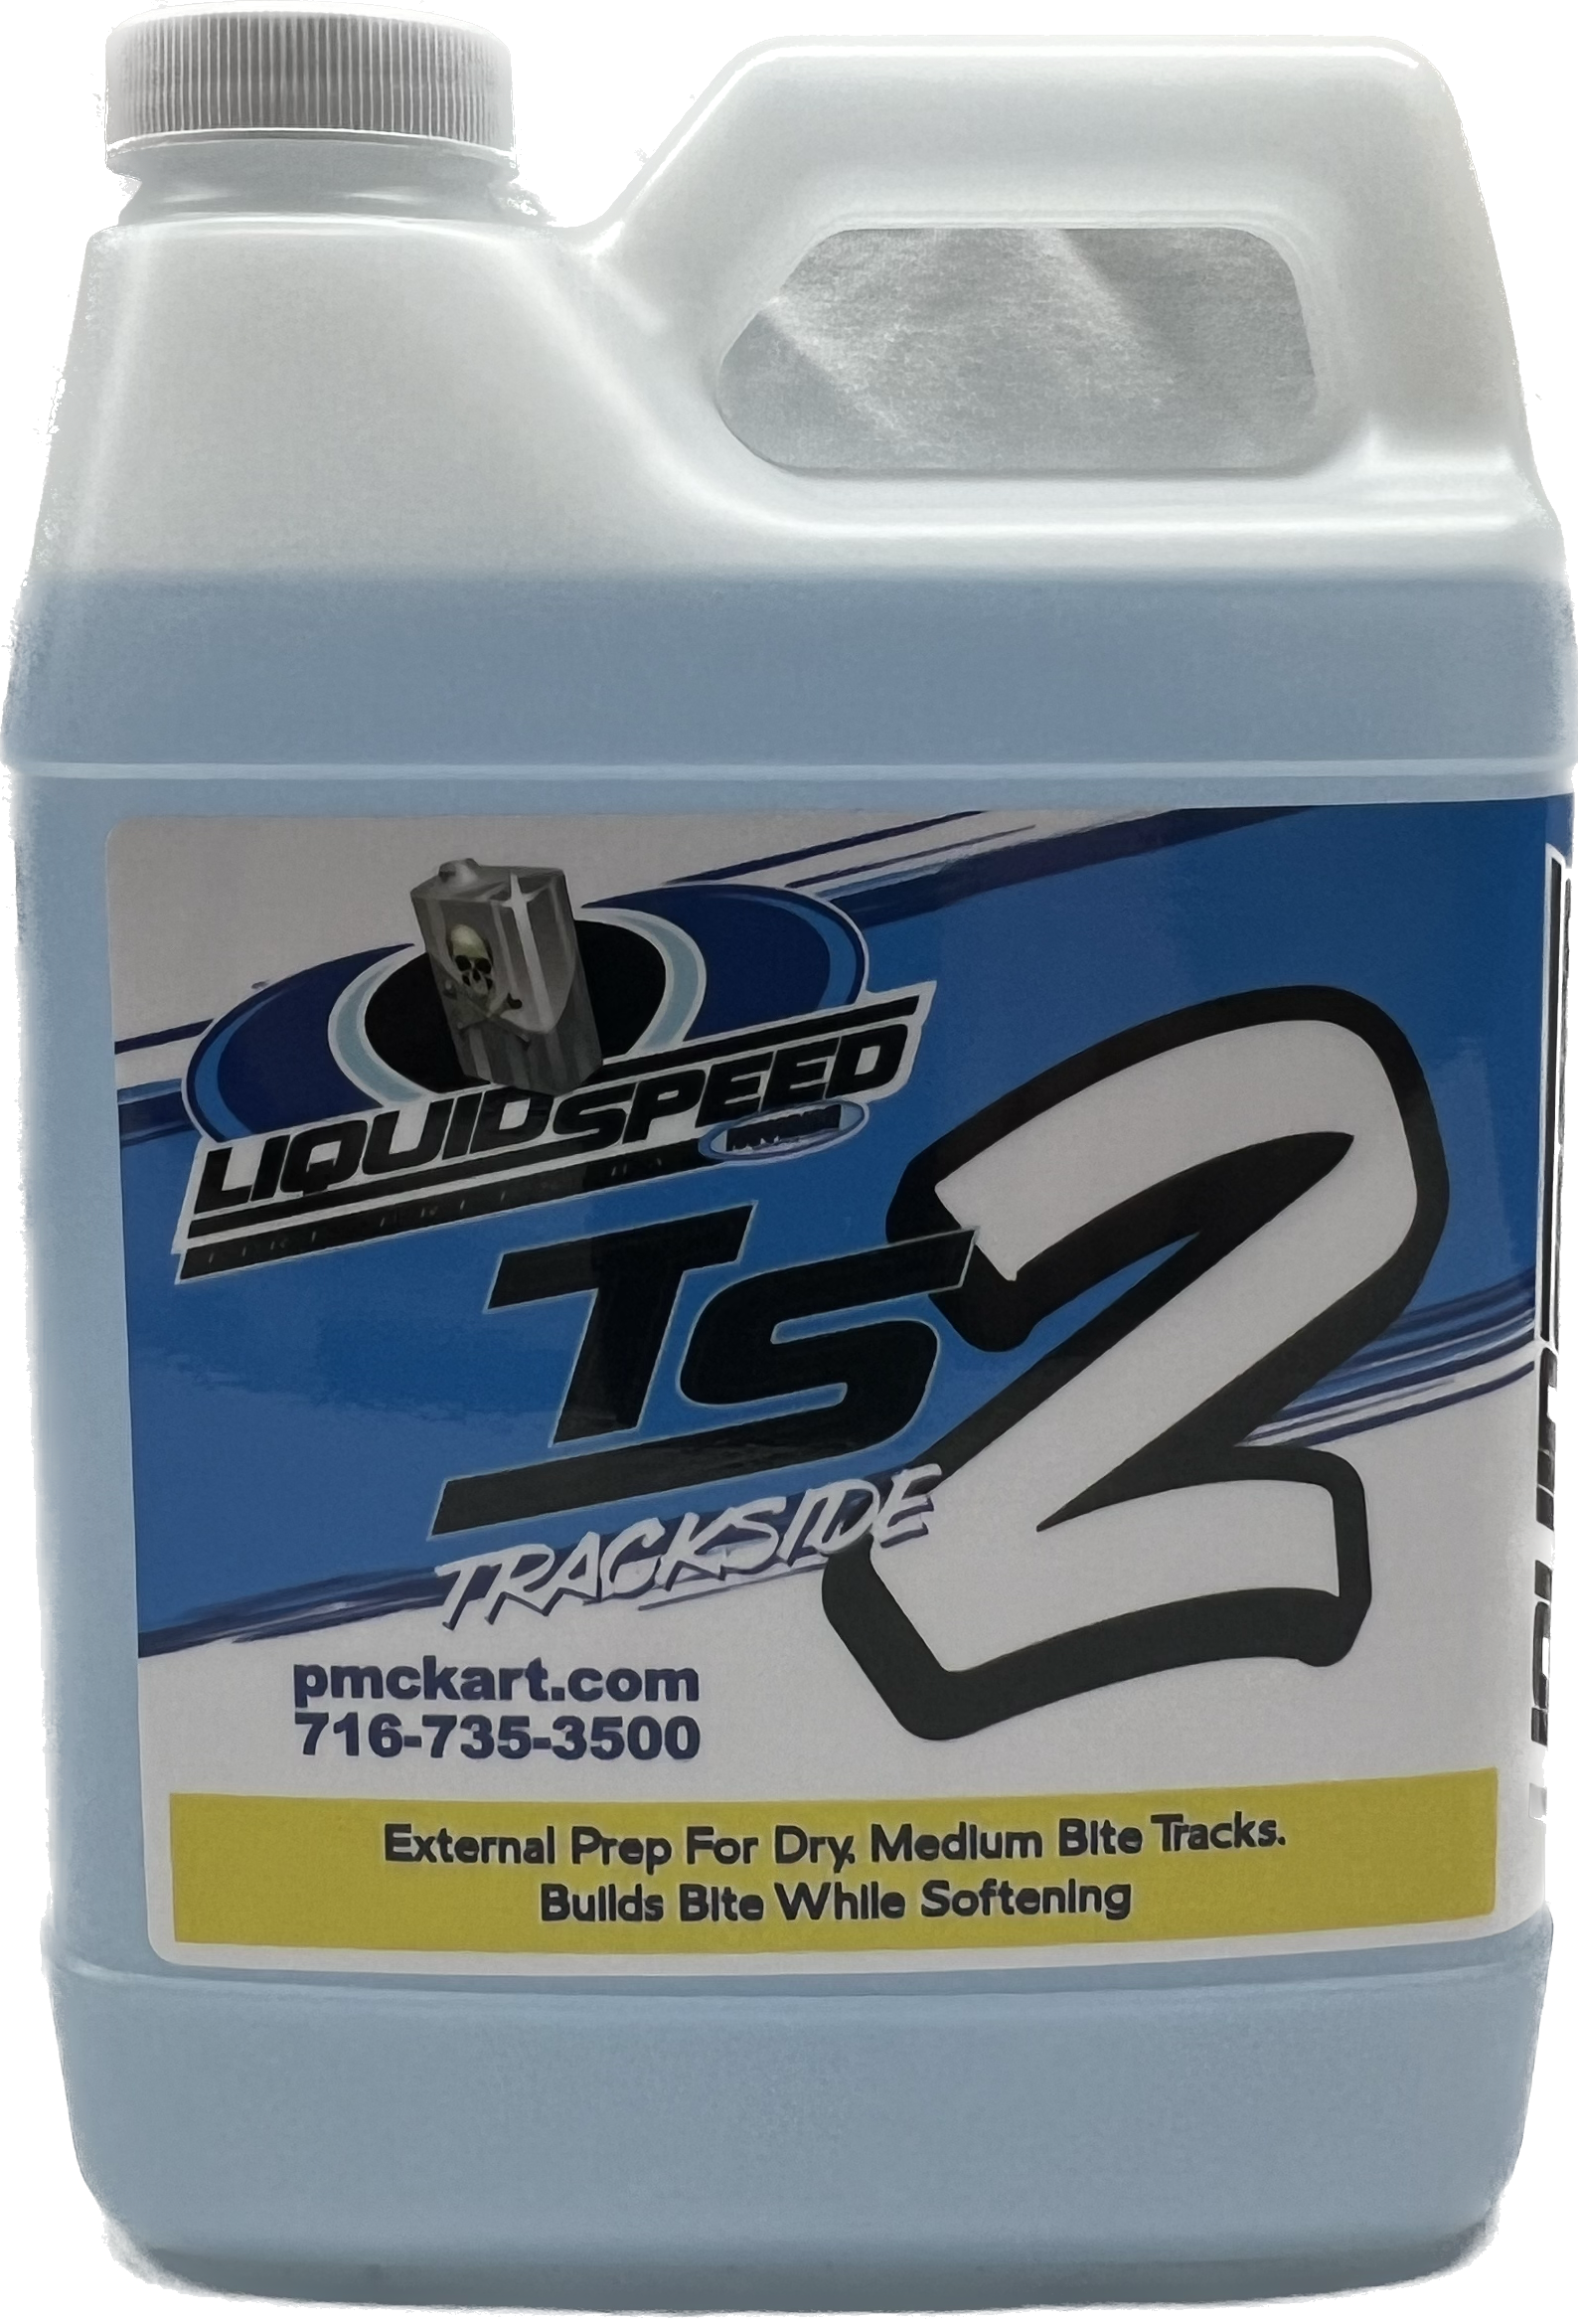 Tire Prep - Liquid Speed™ #TS2-Gallon - Product Details